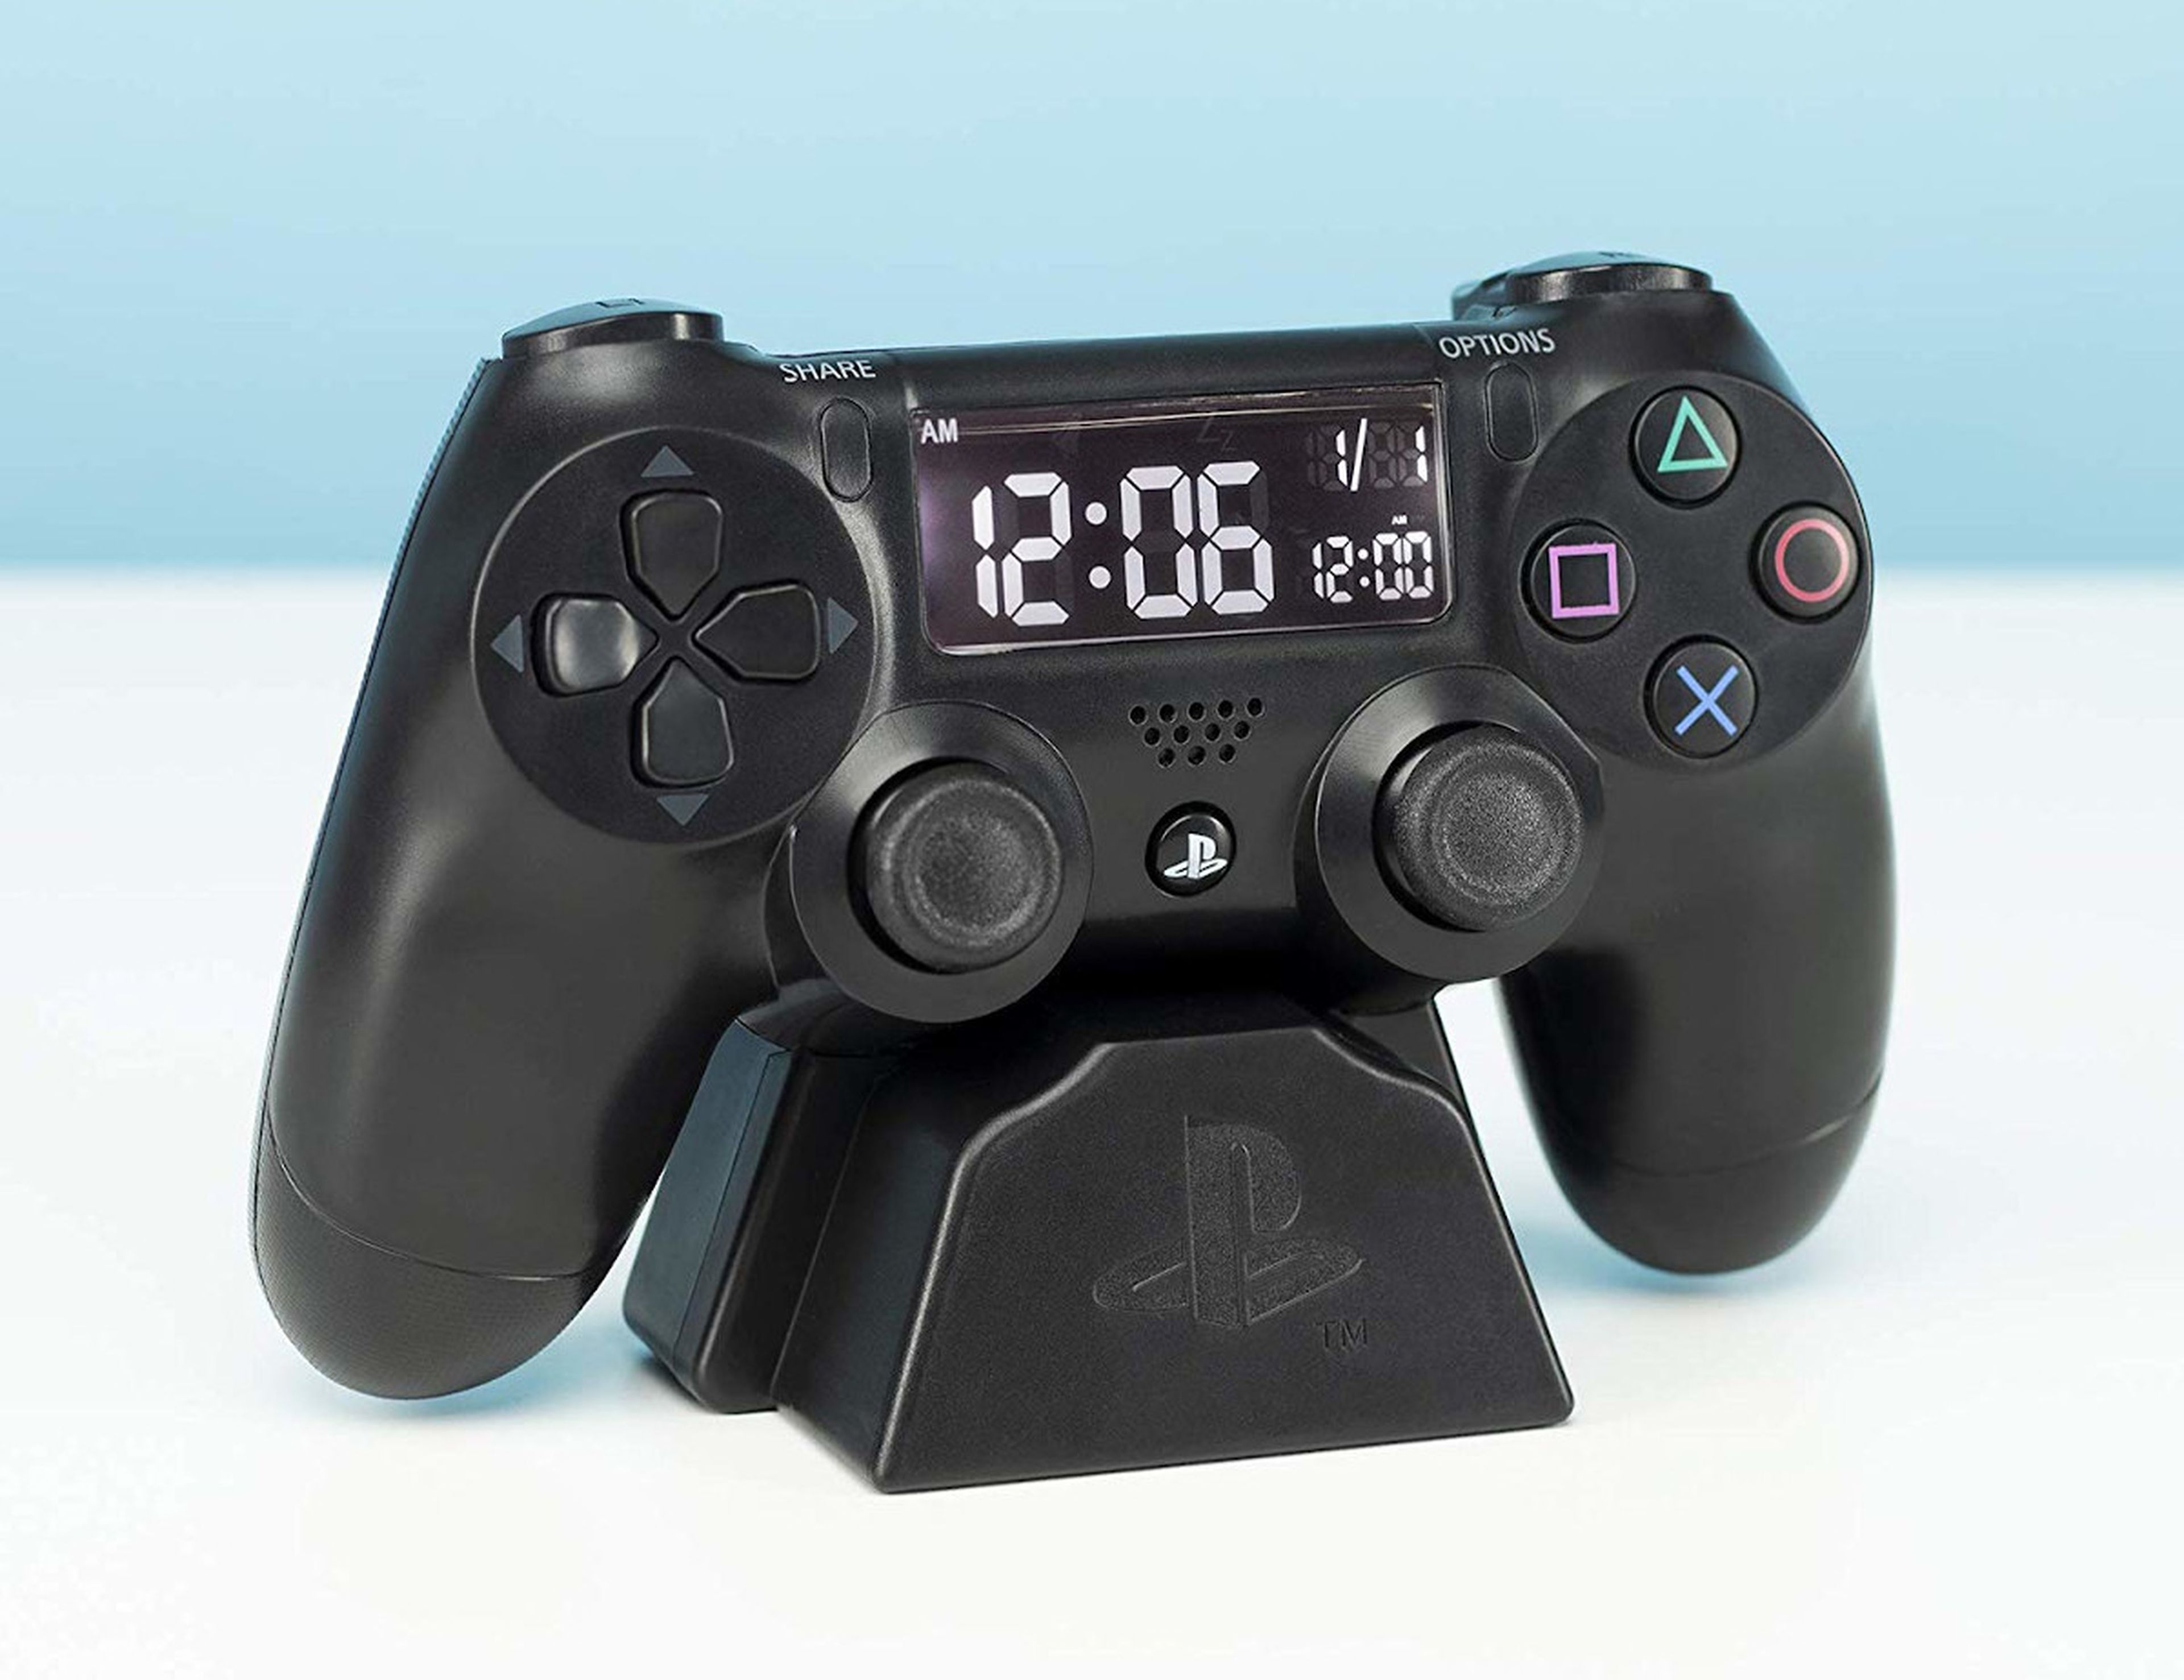 Comprar Reloj Despertador PlayStation Mando PS5